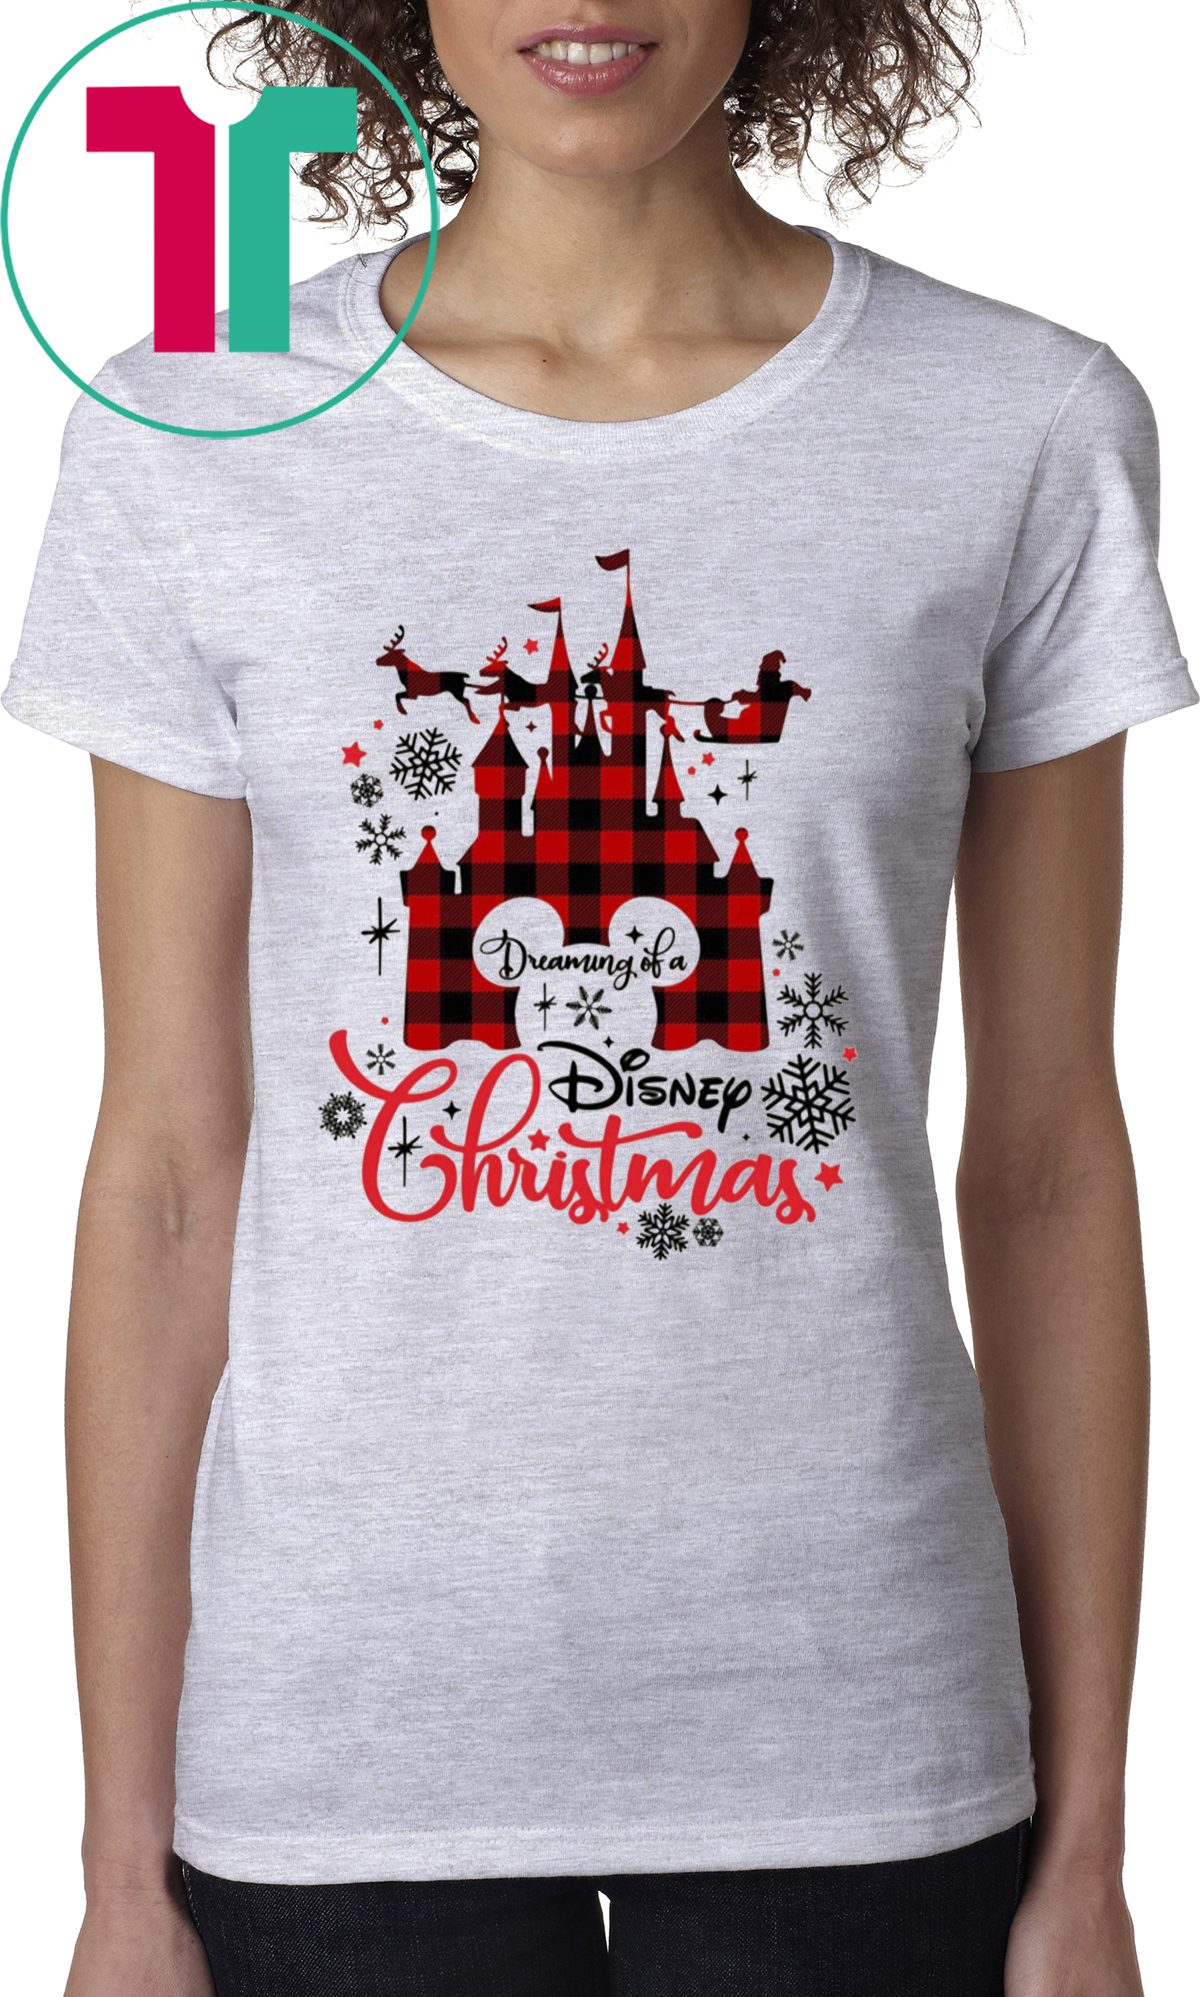 Disneyland Dreaming of a Disney Christmas 2020 Shirt